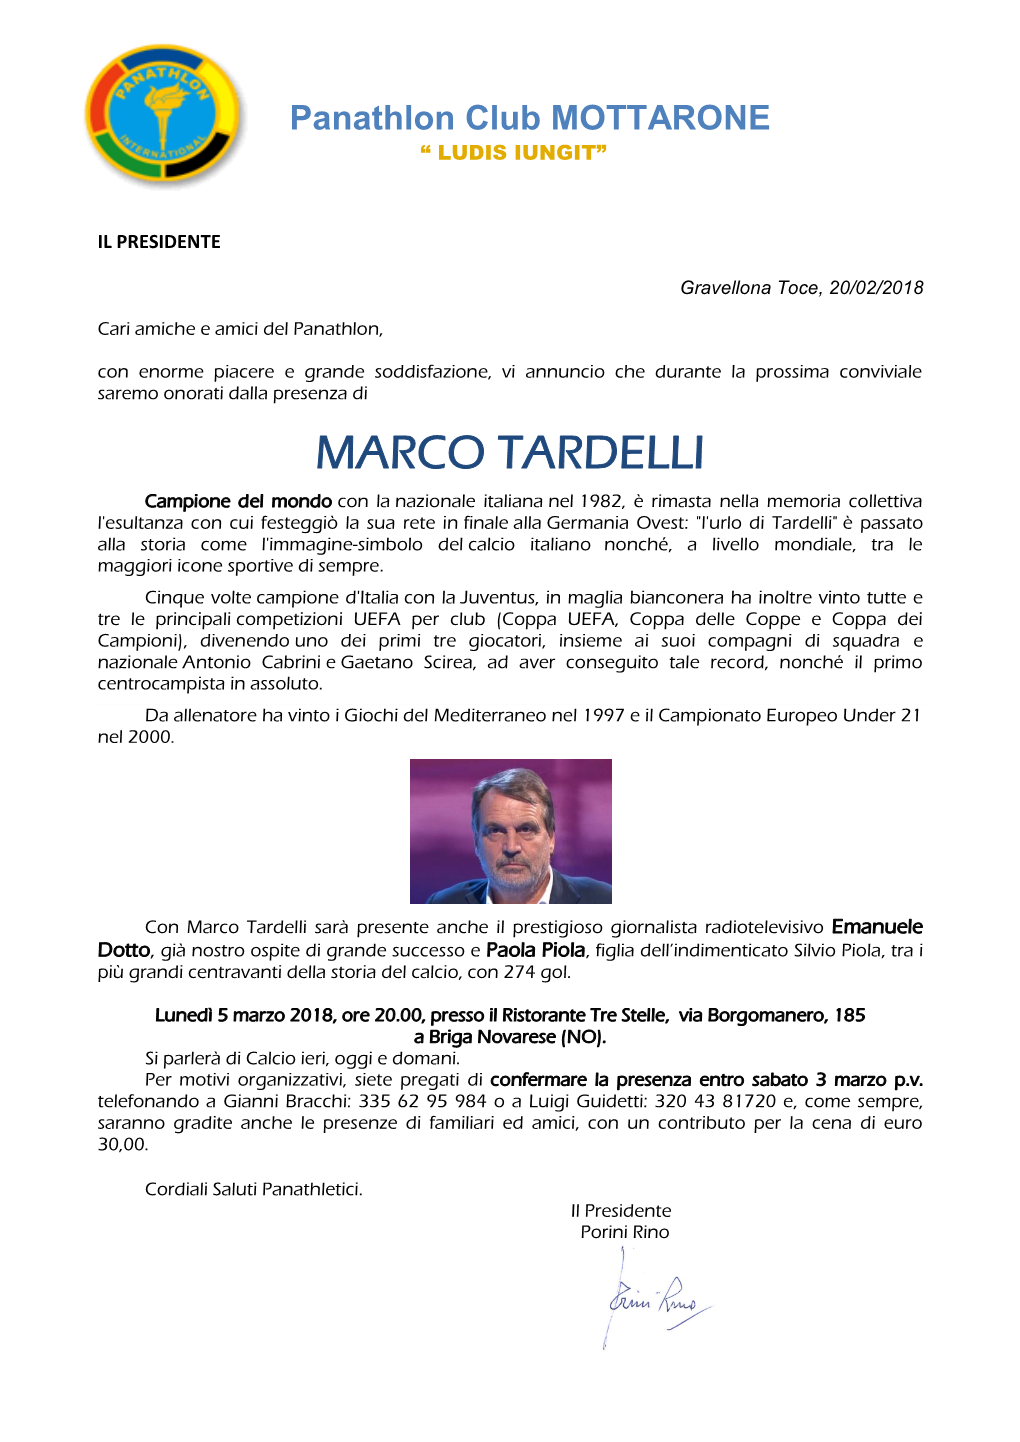 Marco Tardelli